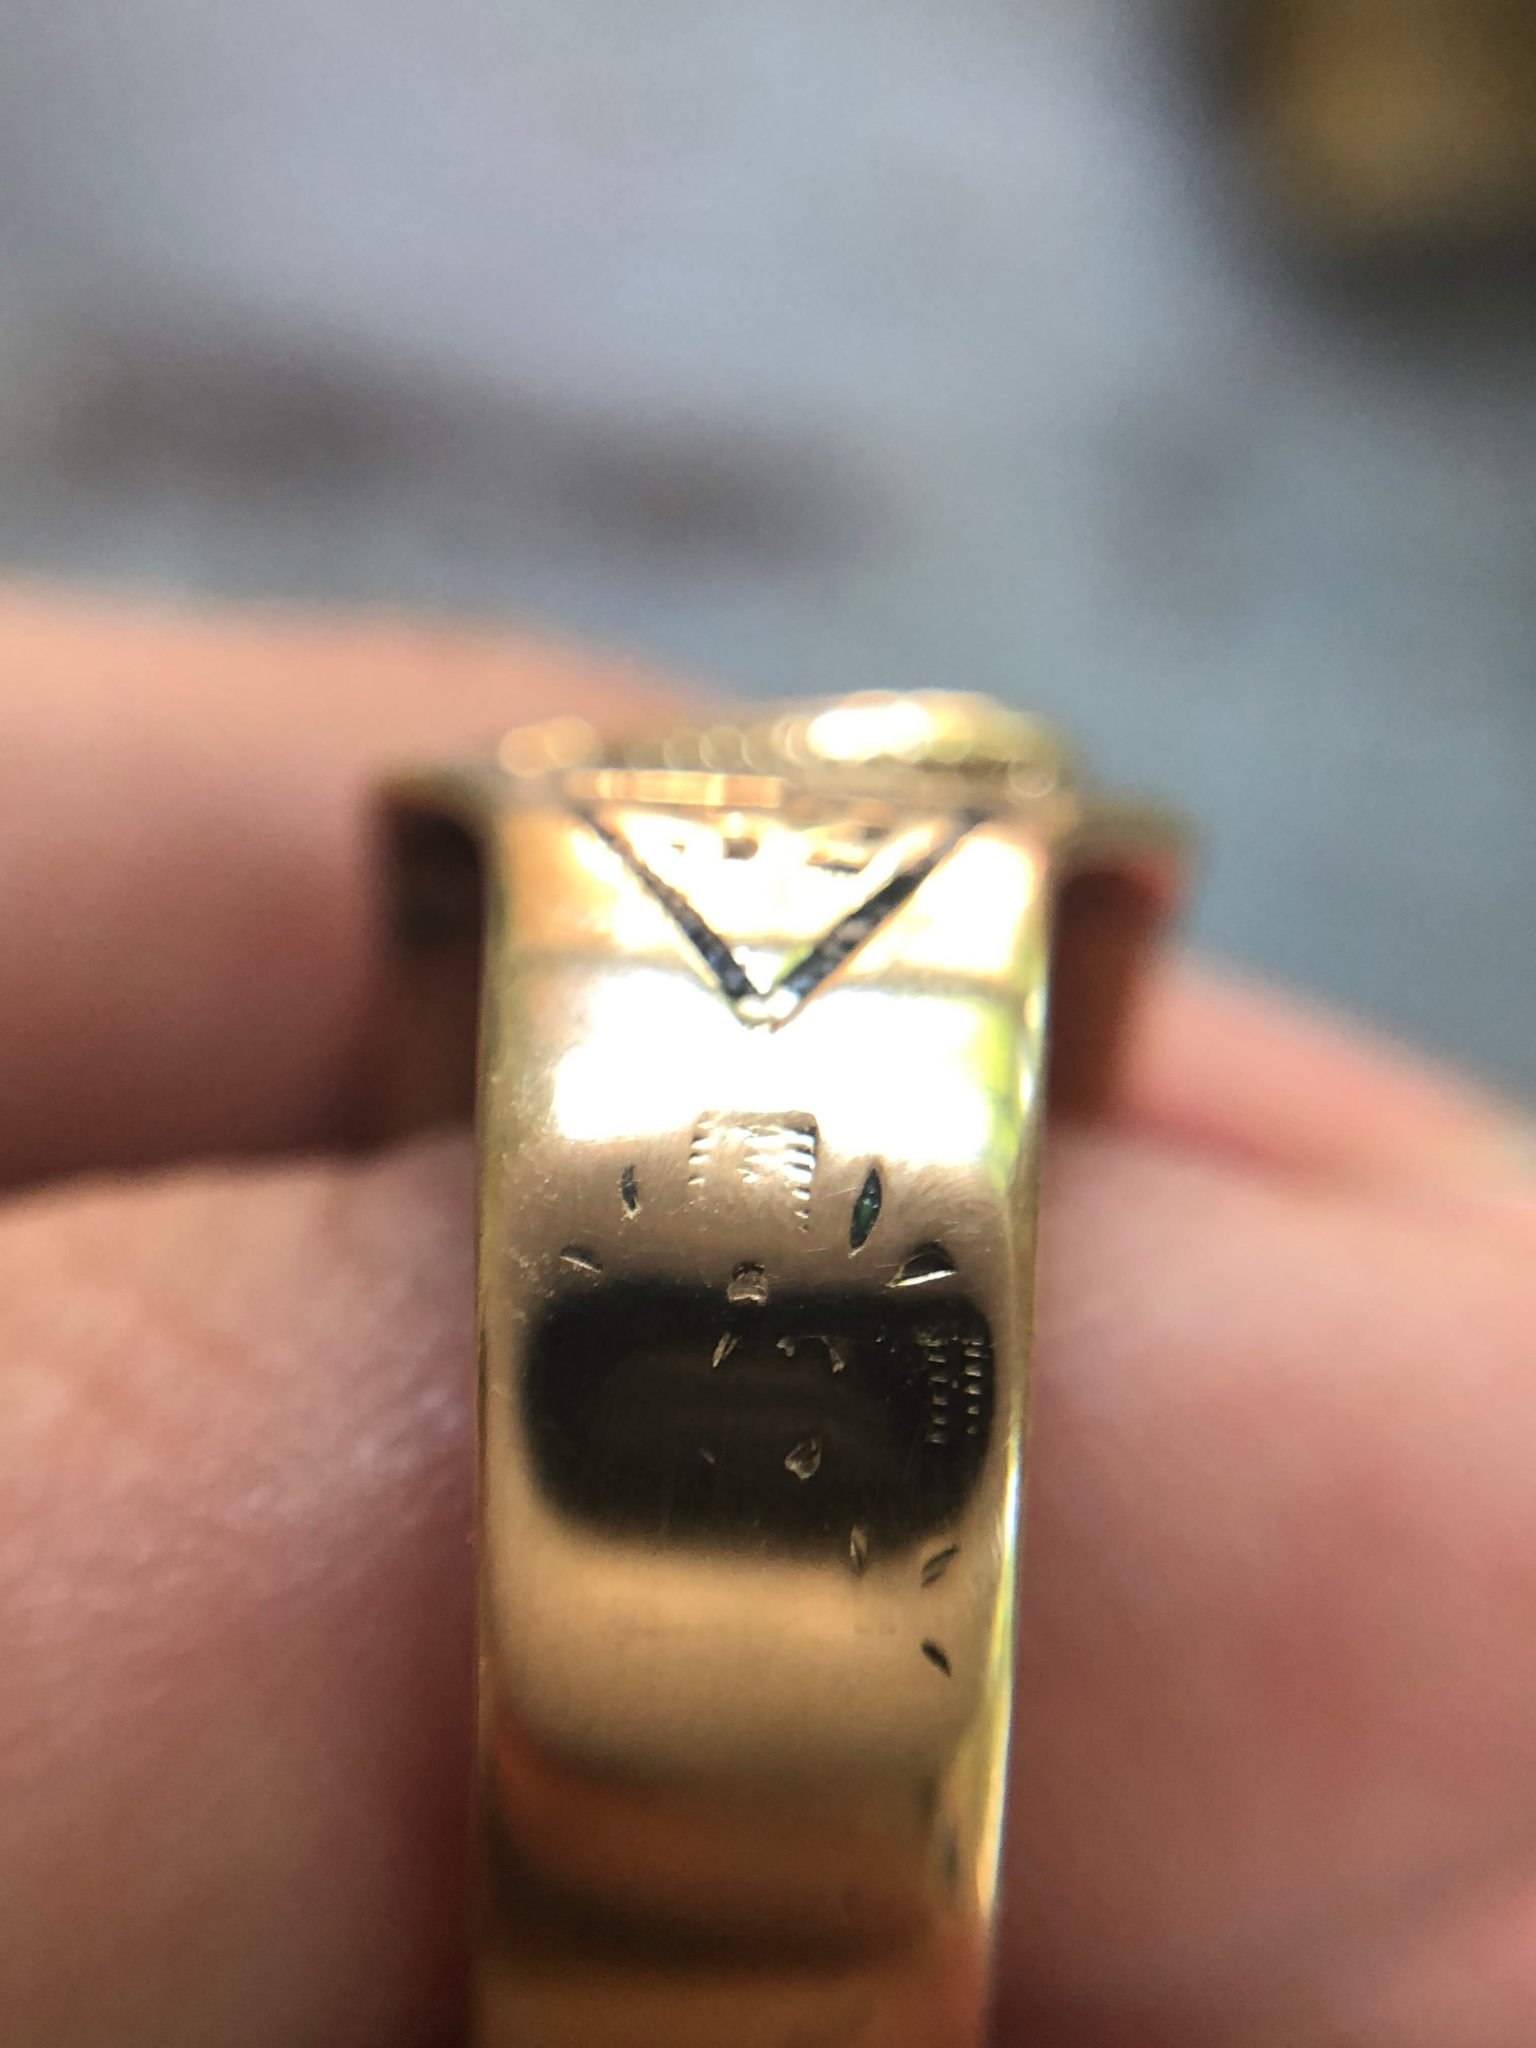 Antique 14kt Yellow Gold Diamond Double Eagle Masonic Ring